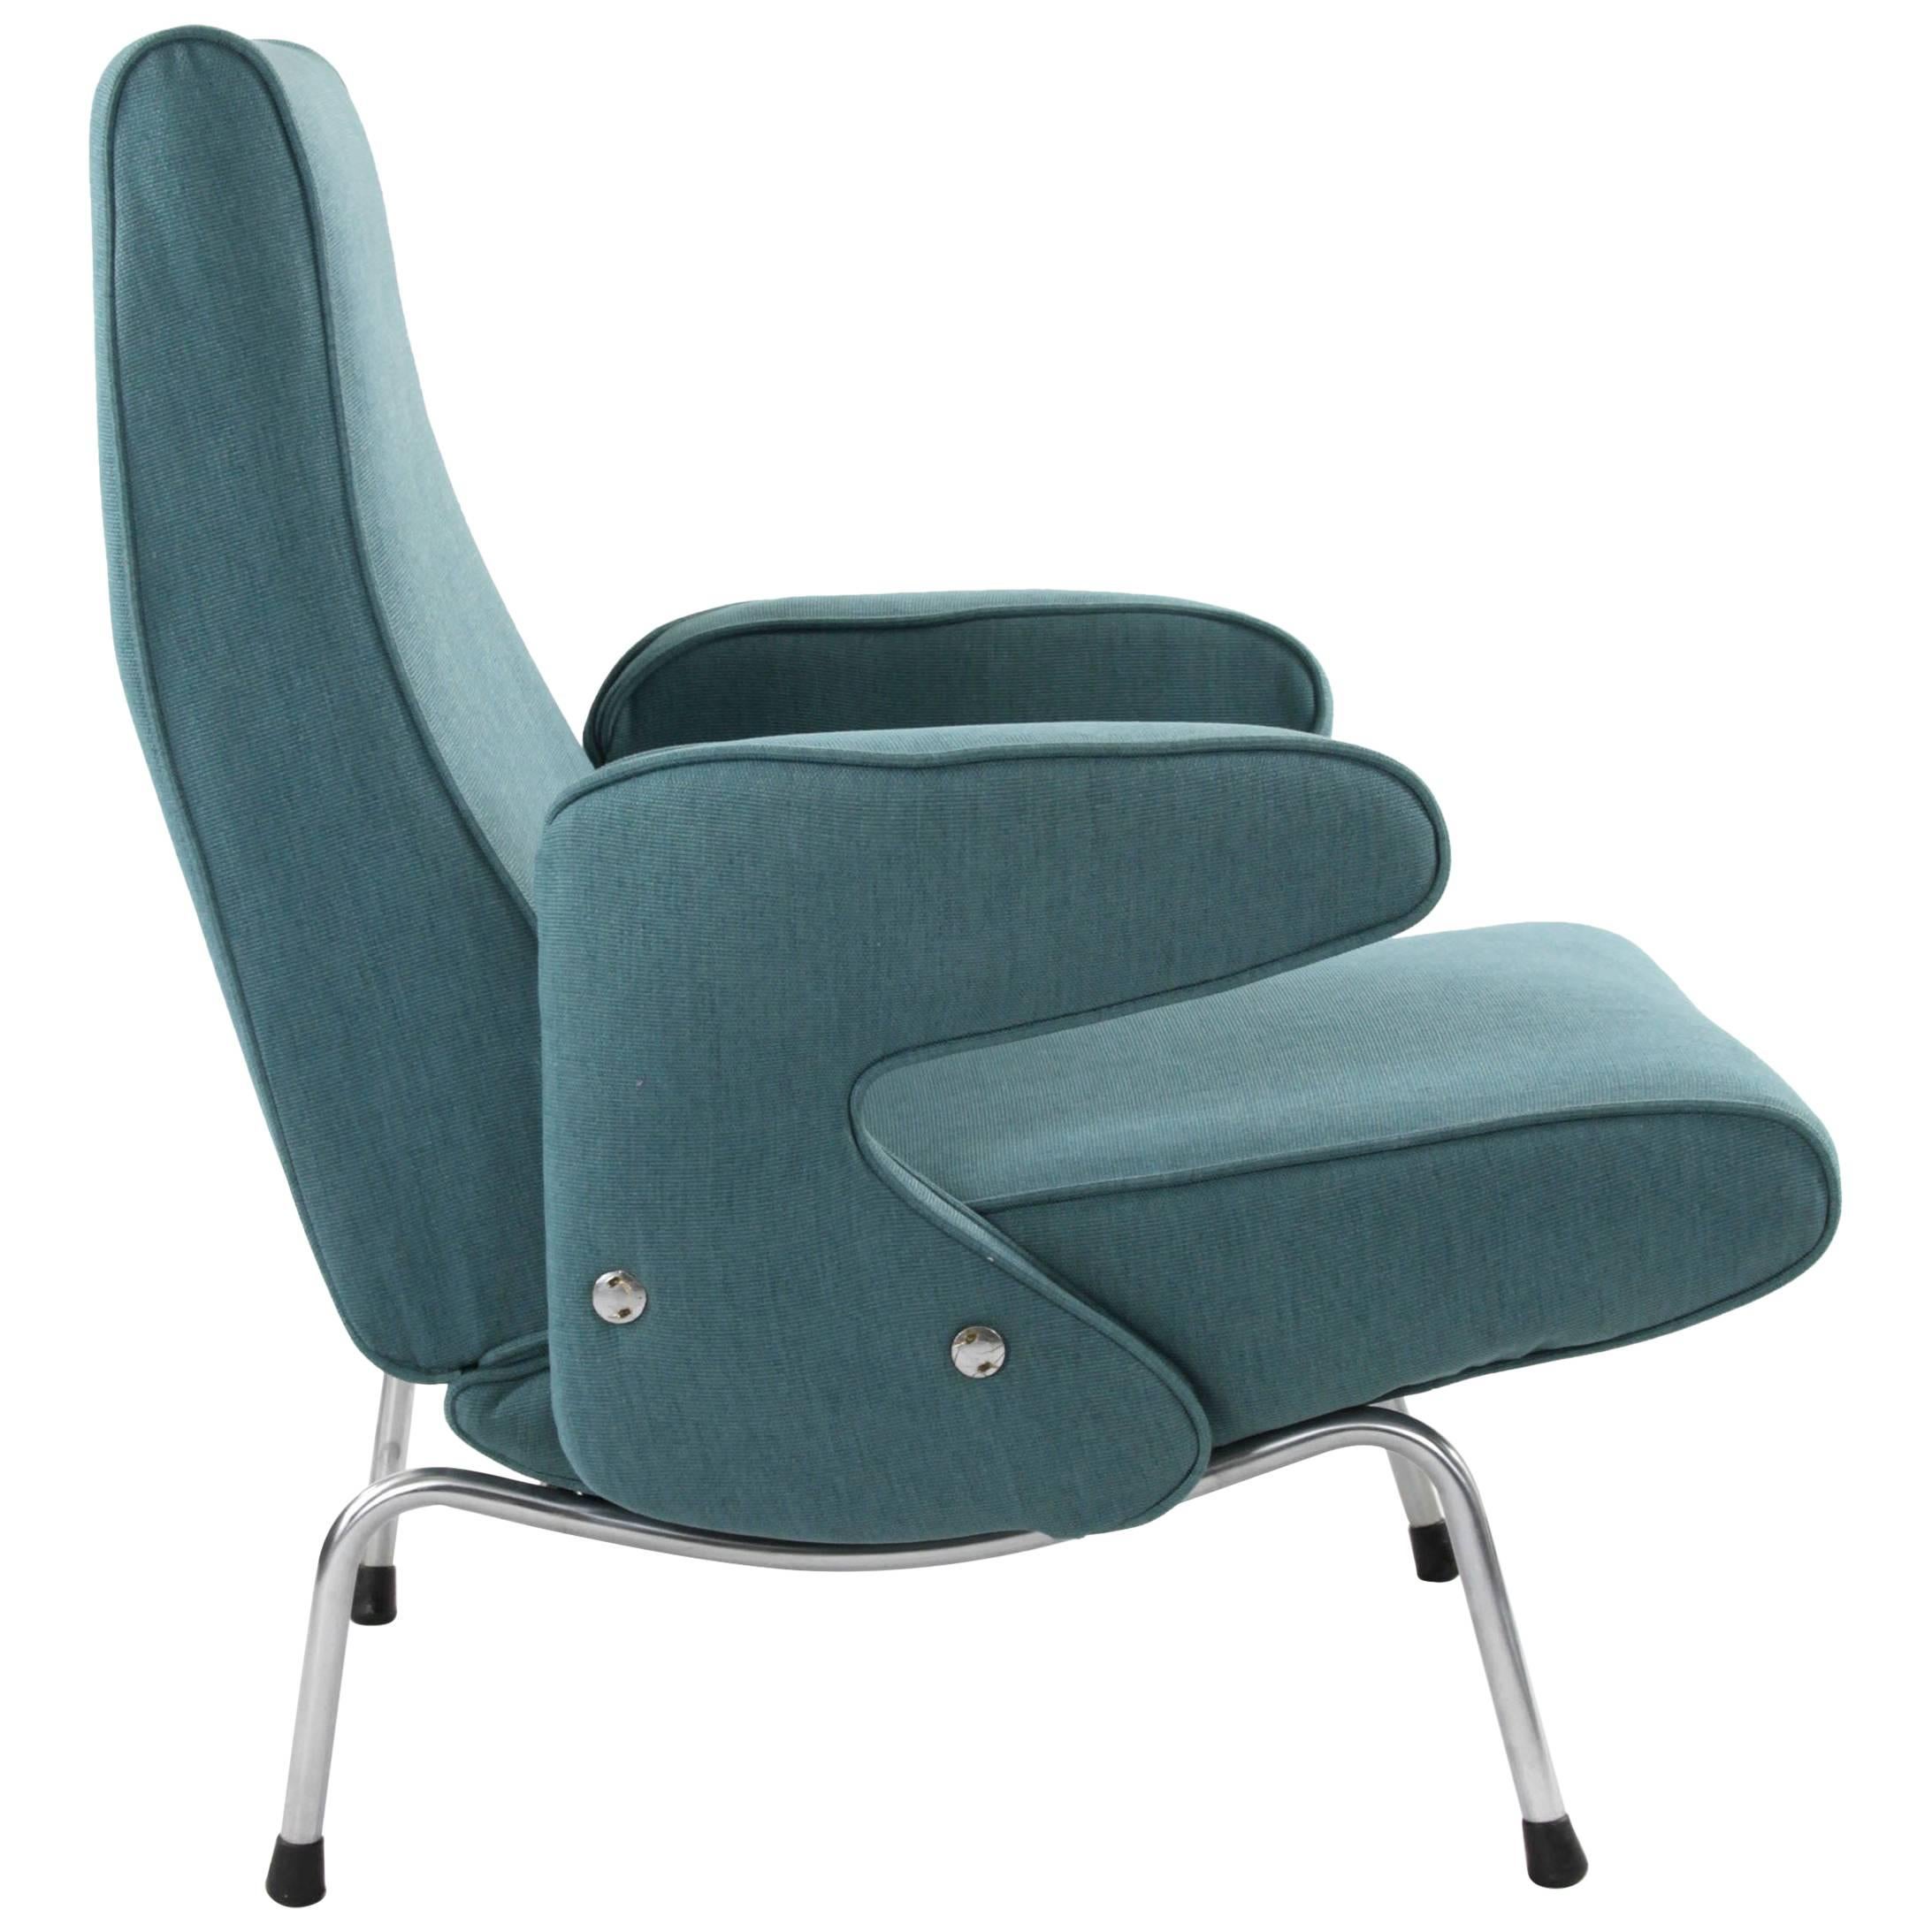 Erberto Carboni for Arflex Light Blue Delfino Chair with Chrome Legs, 1955